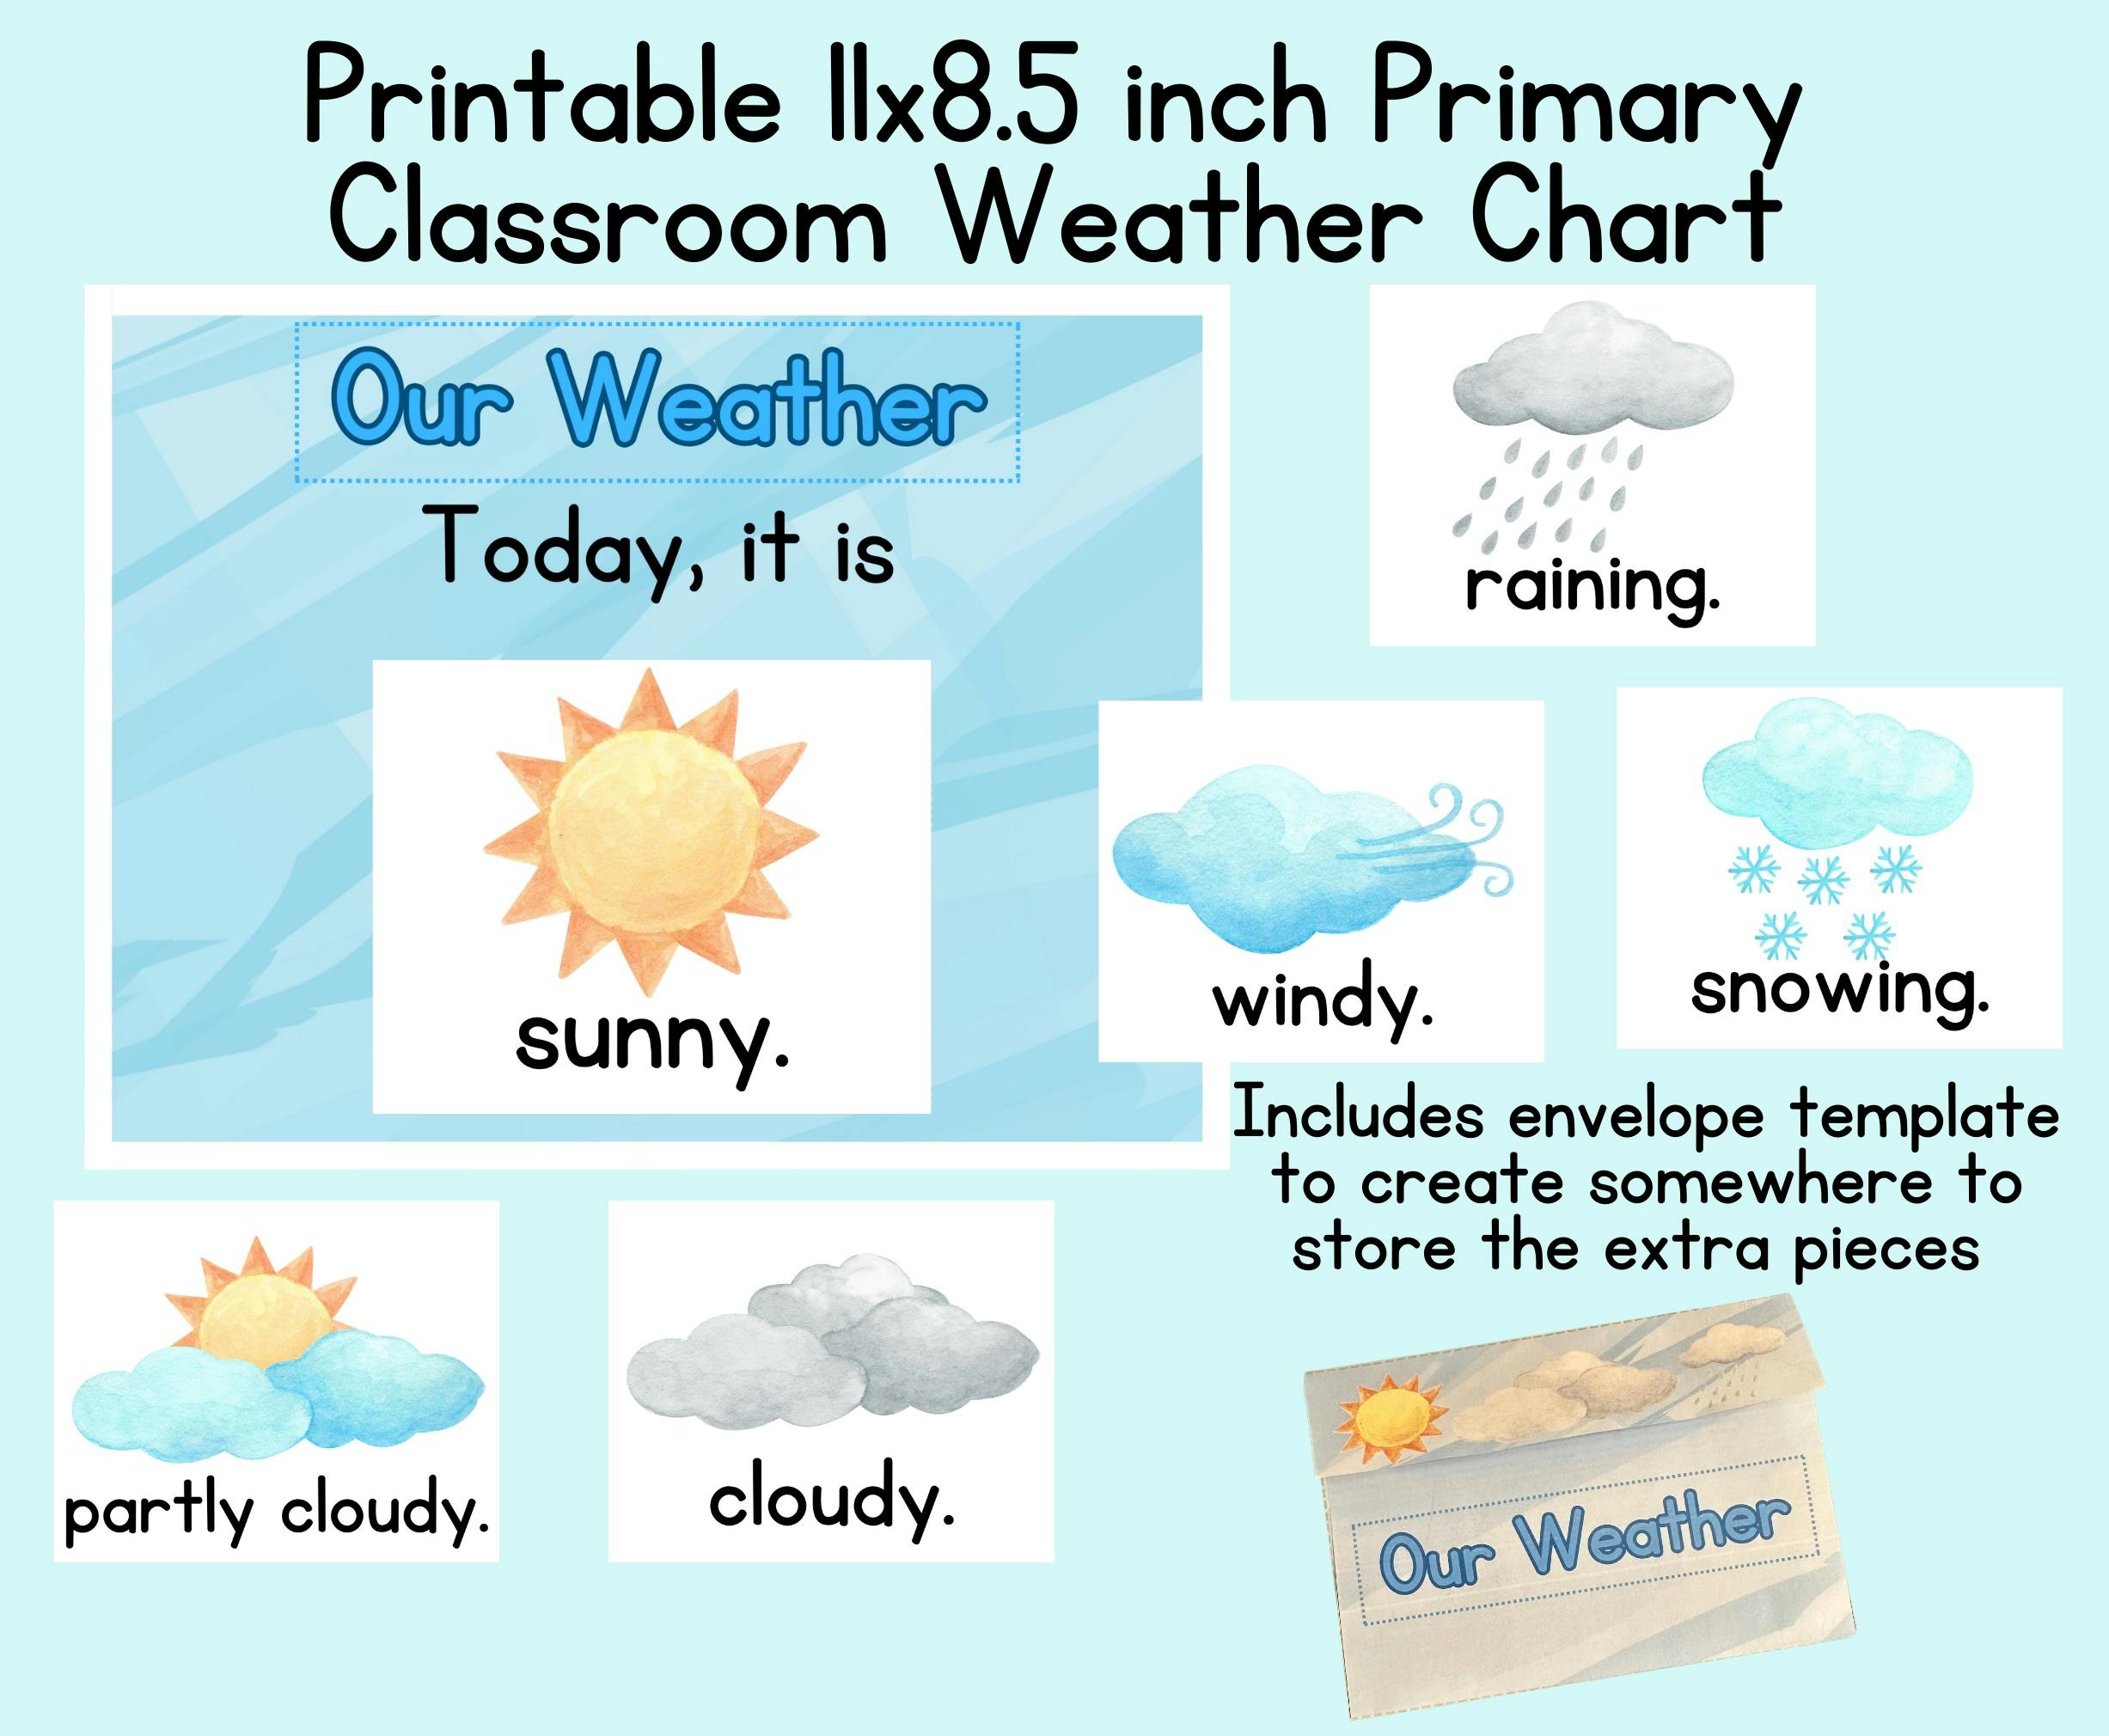 Printable classroom weather chart